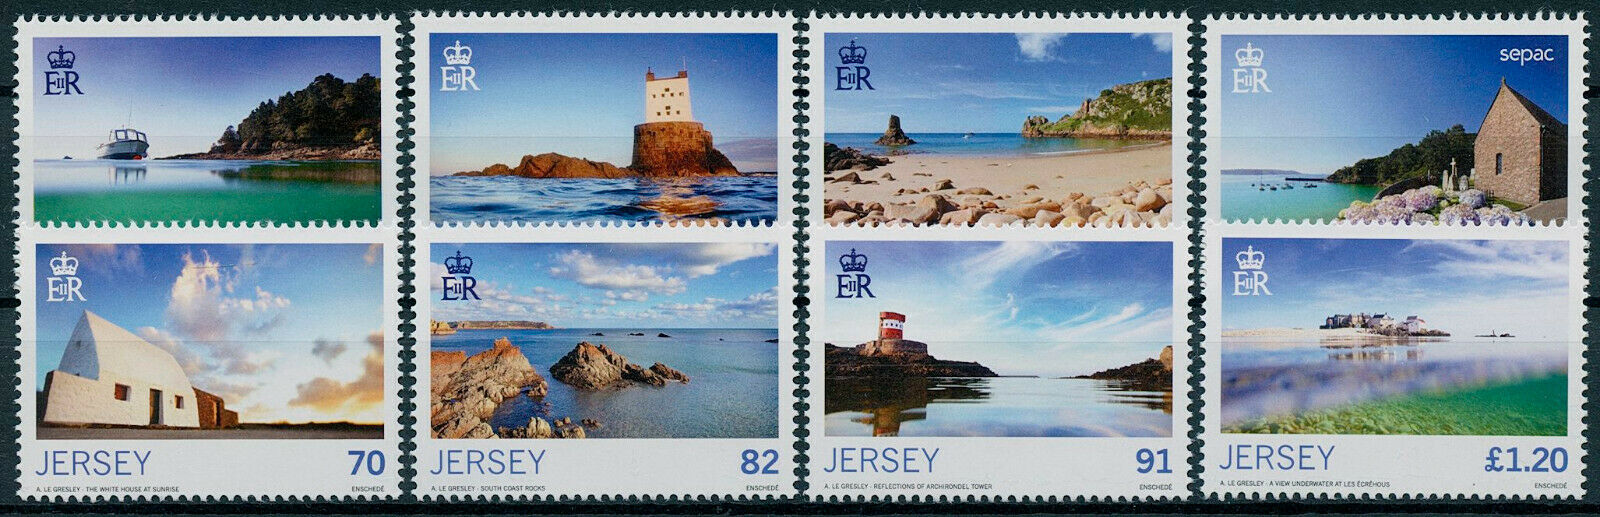 Jersey 2014 MNH Landscapes Stamps Seasons Summer SEPAC Architecture 8v Set